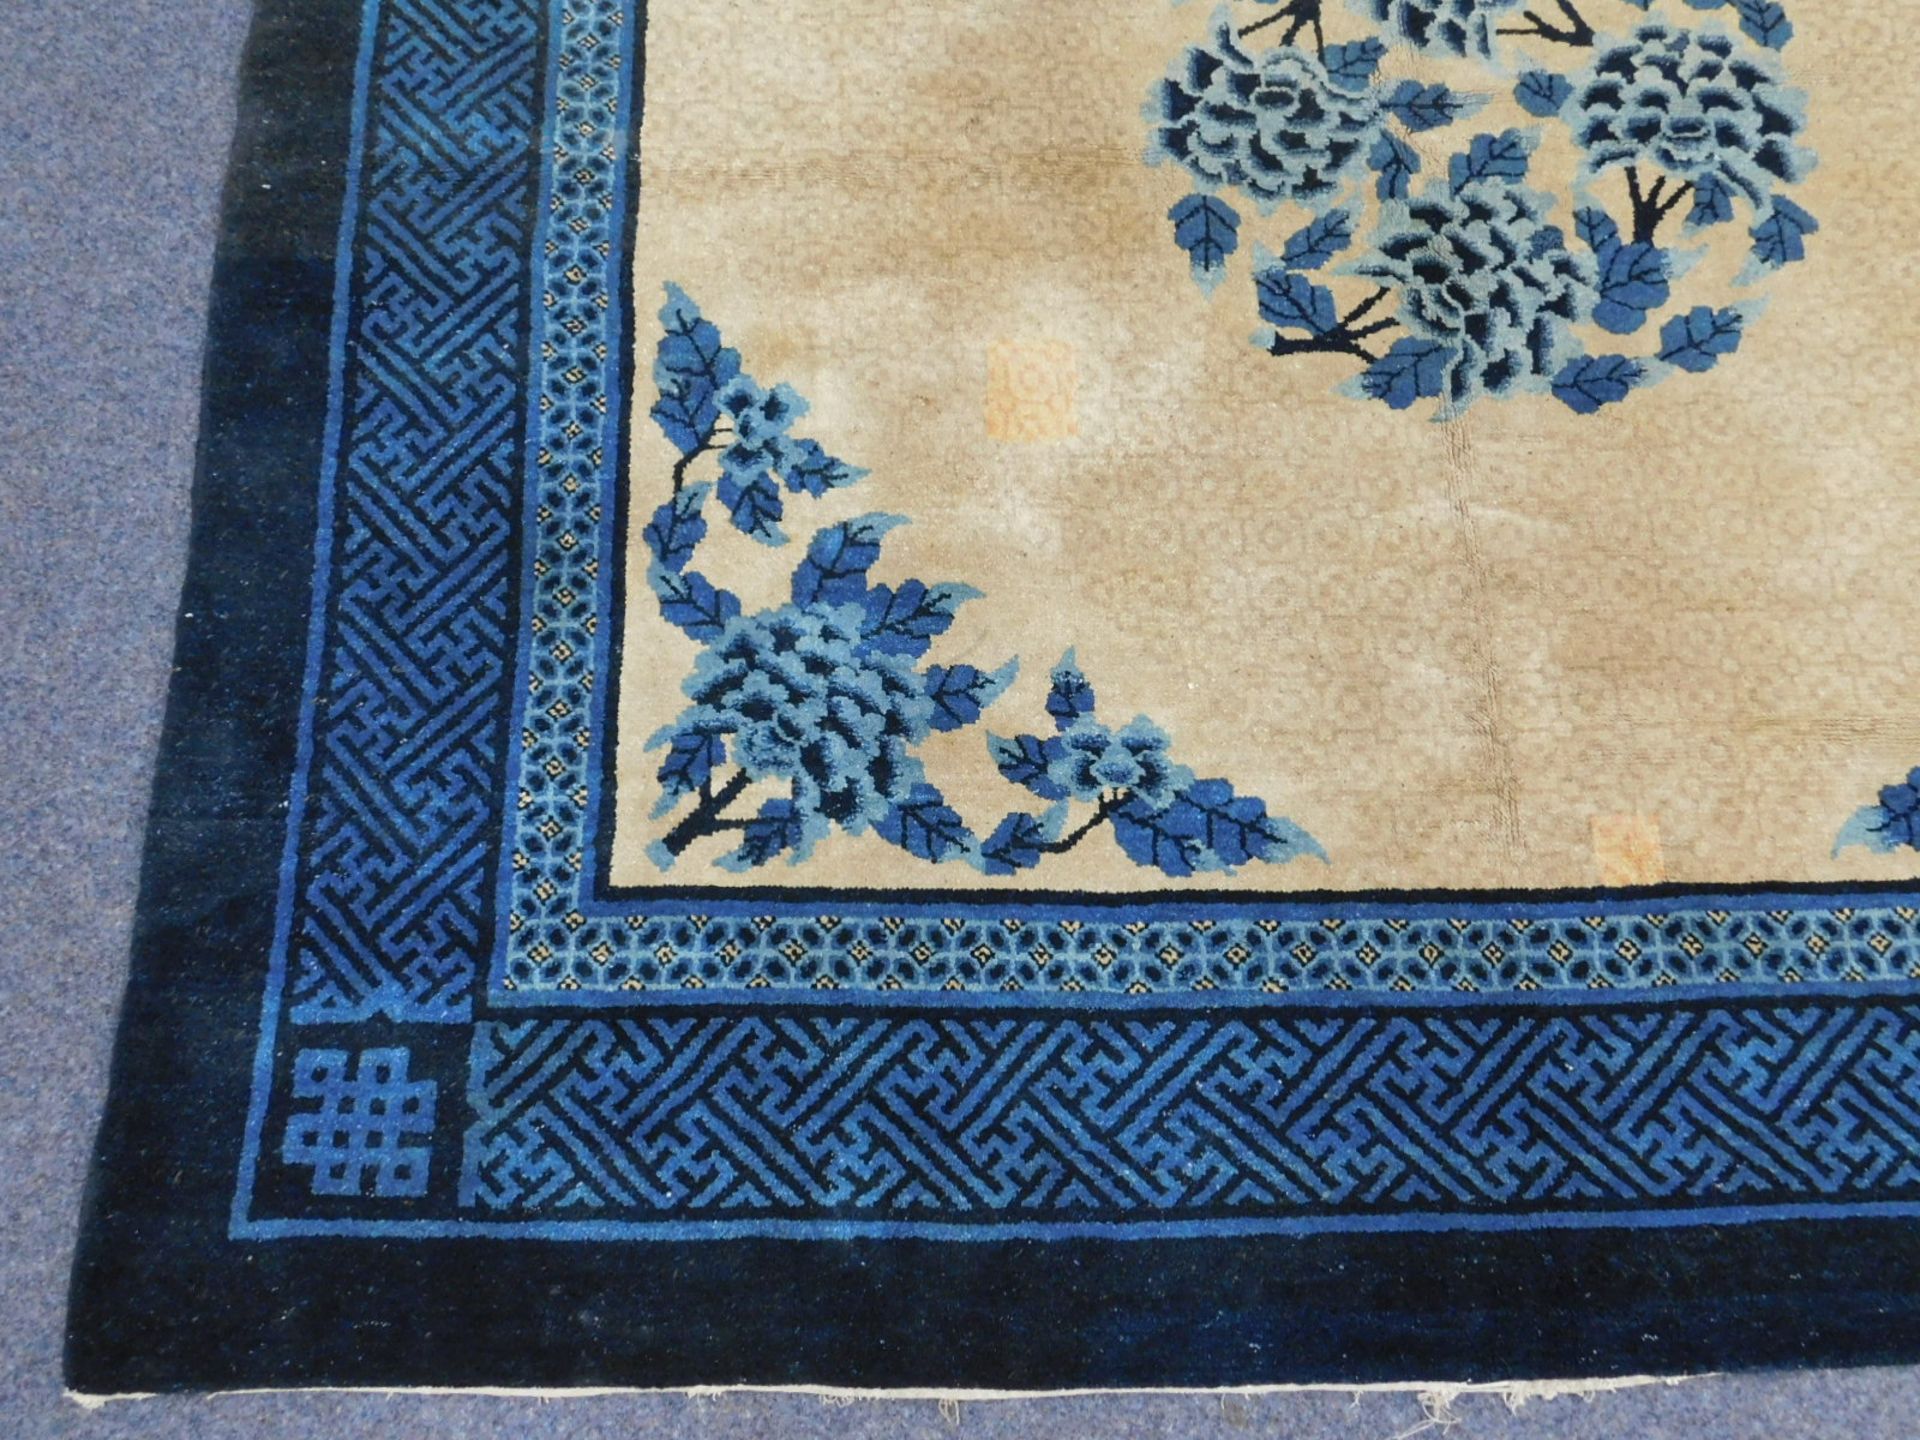 Pau-Tou China Teppich antik über 100 Jahre alt. - Bild 2 aus 10